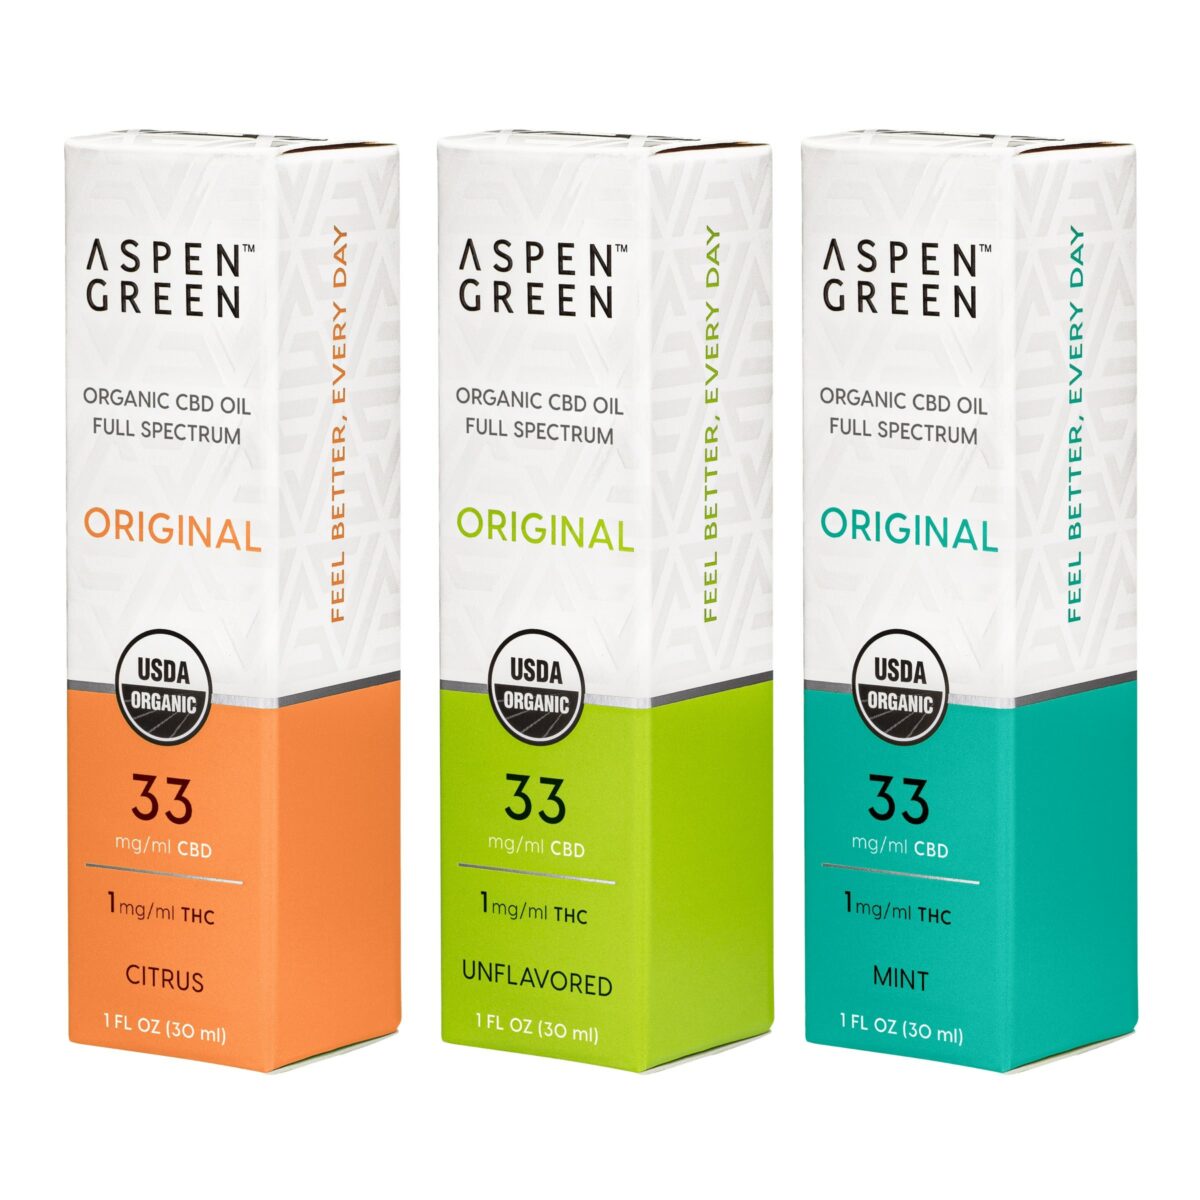 Aspen Green USDA Certified Organic CBD Oil Boxes, Original Strength, Variety Flavor